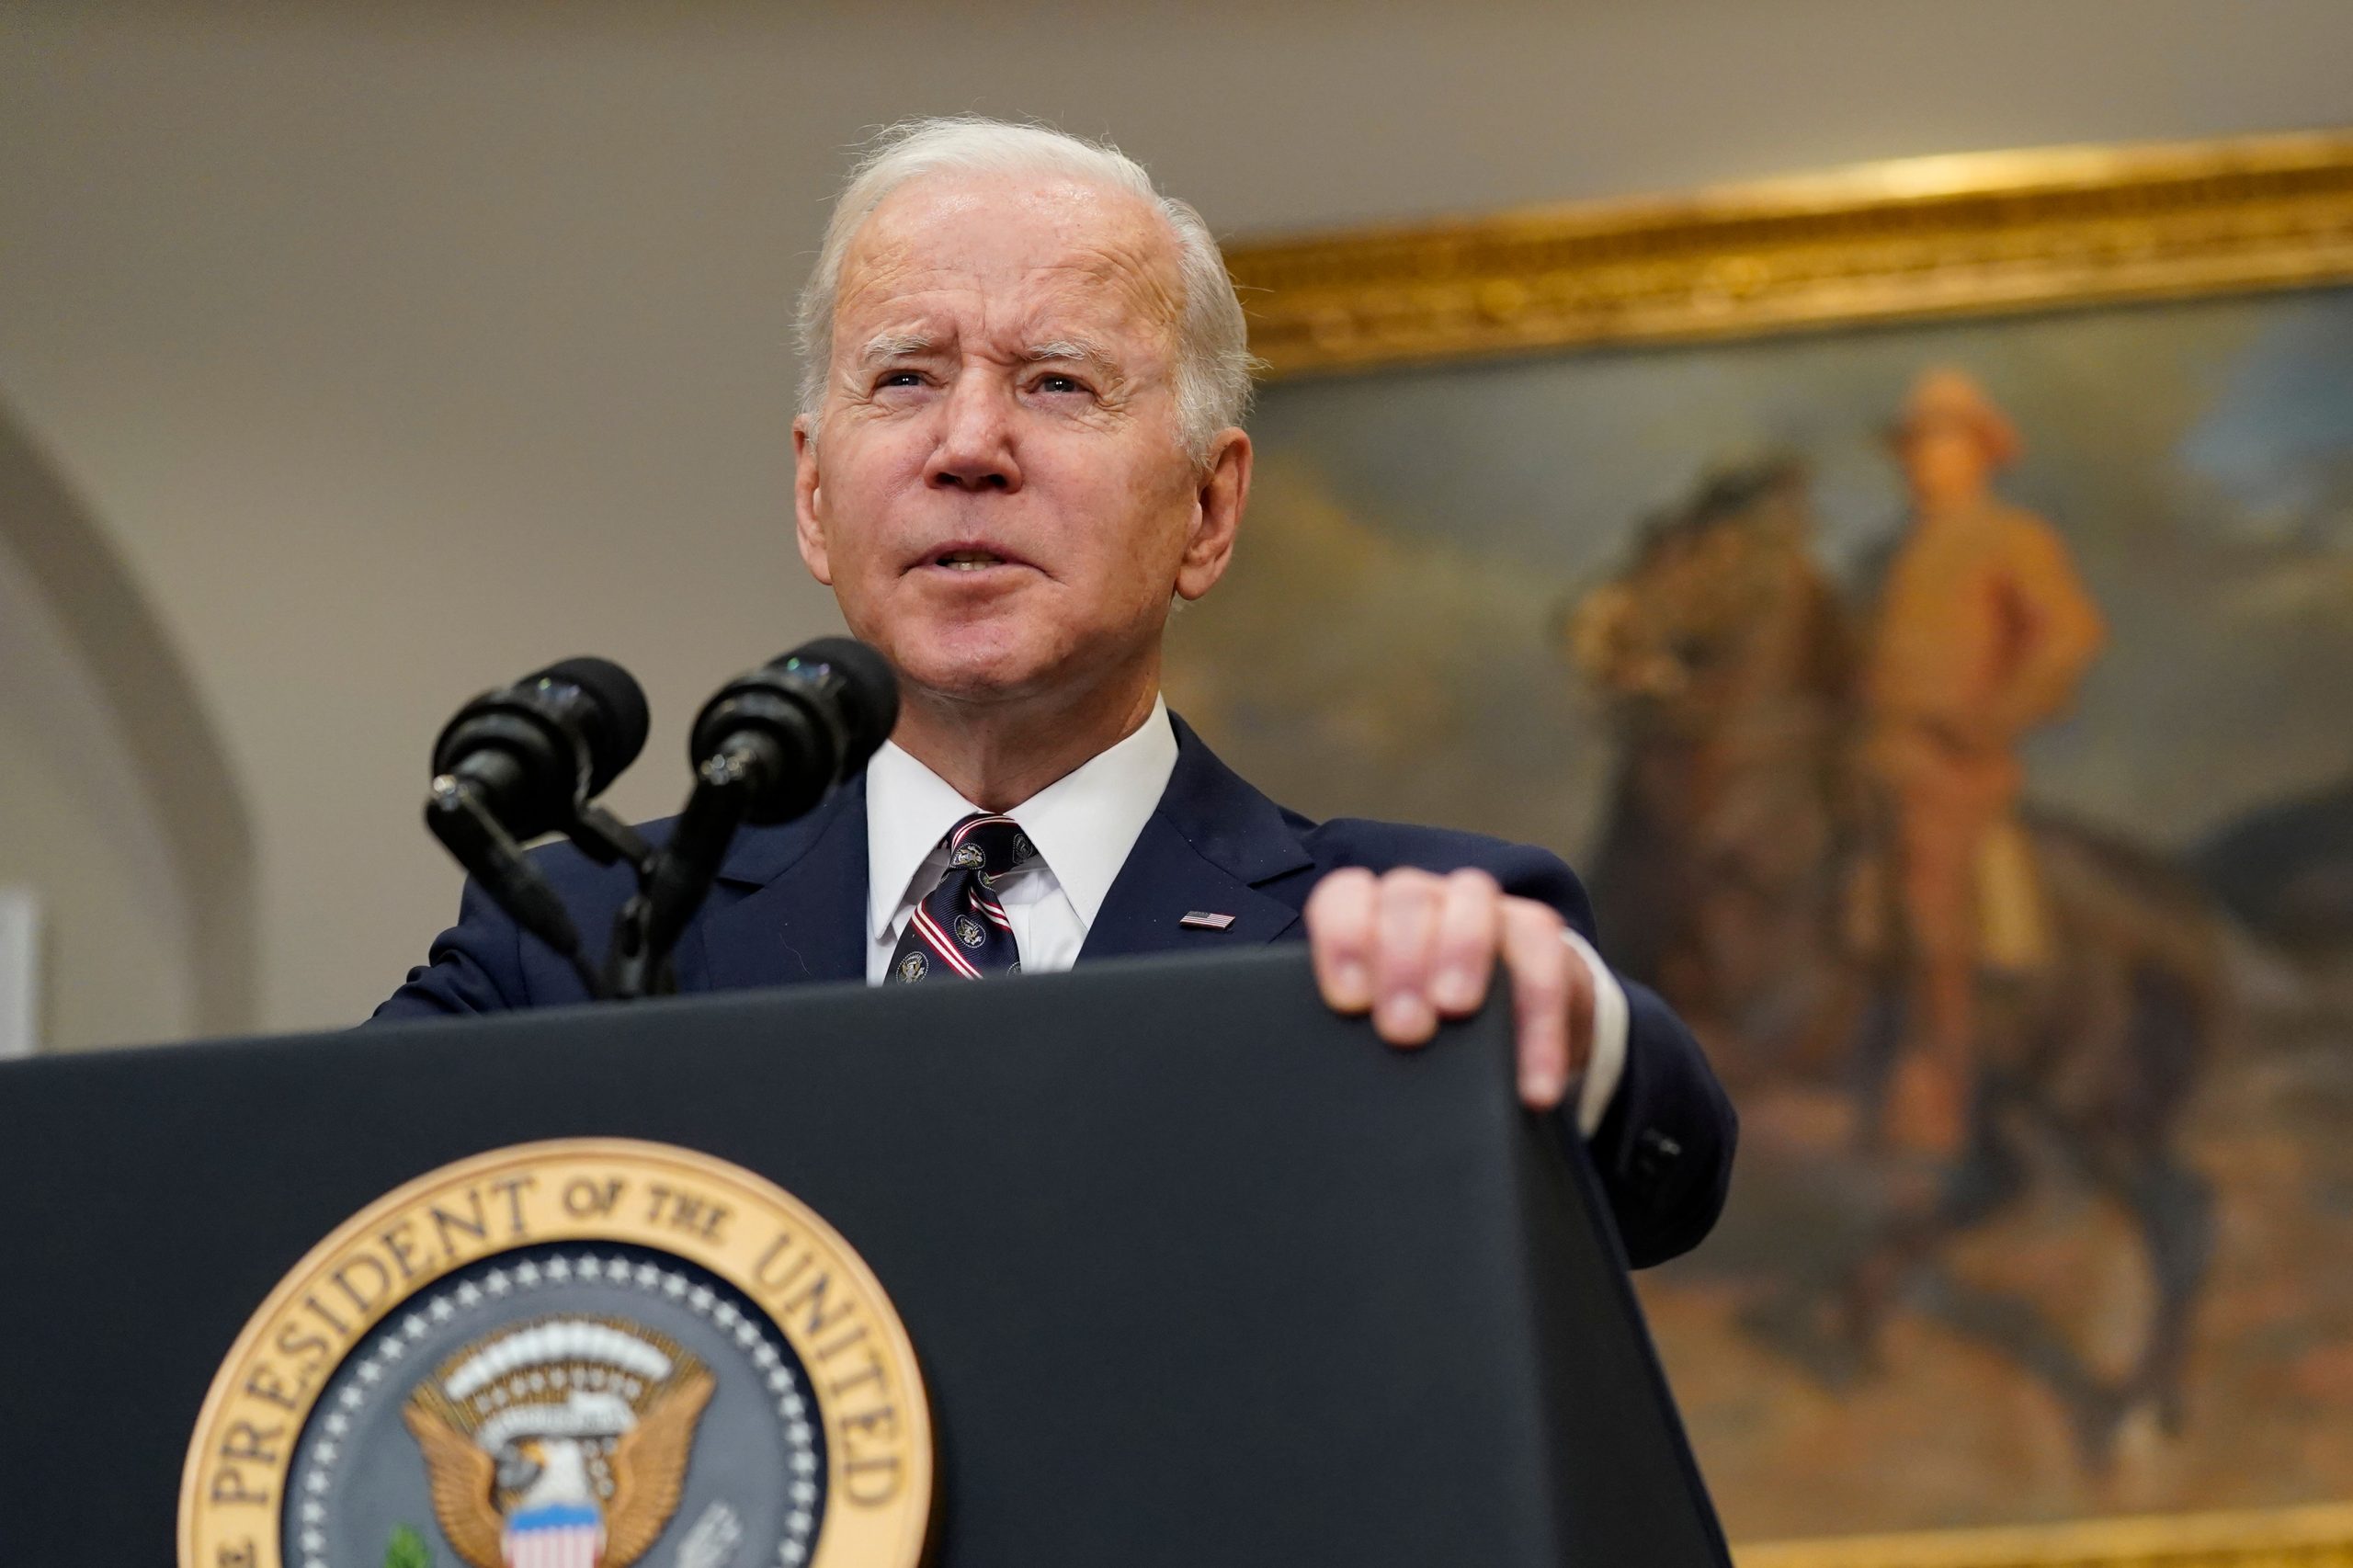 January 6 hearing ‘devastating,’ committee made an ‘overwhelming’ case: Joe Biden